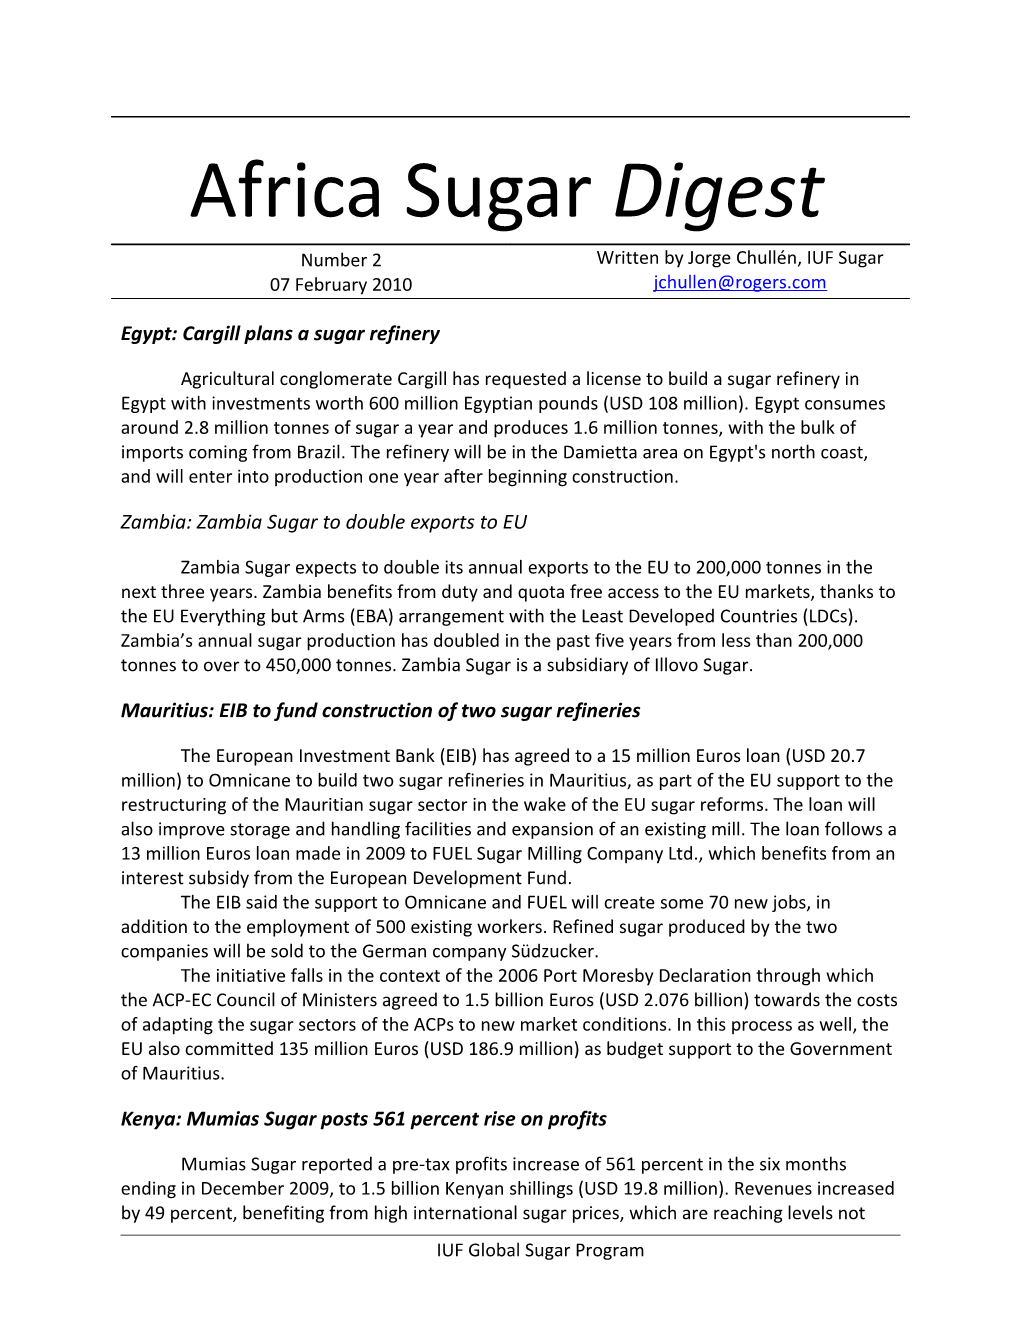 Egypt: Cargill Plans a Sugar Refinery